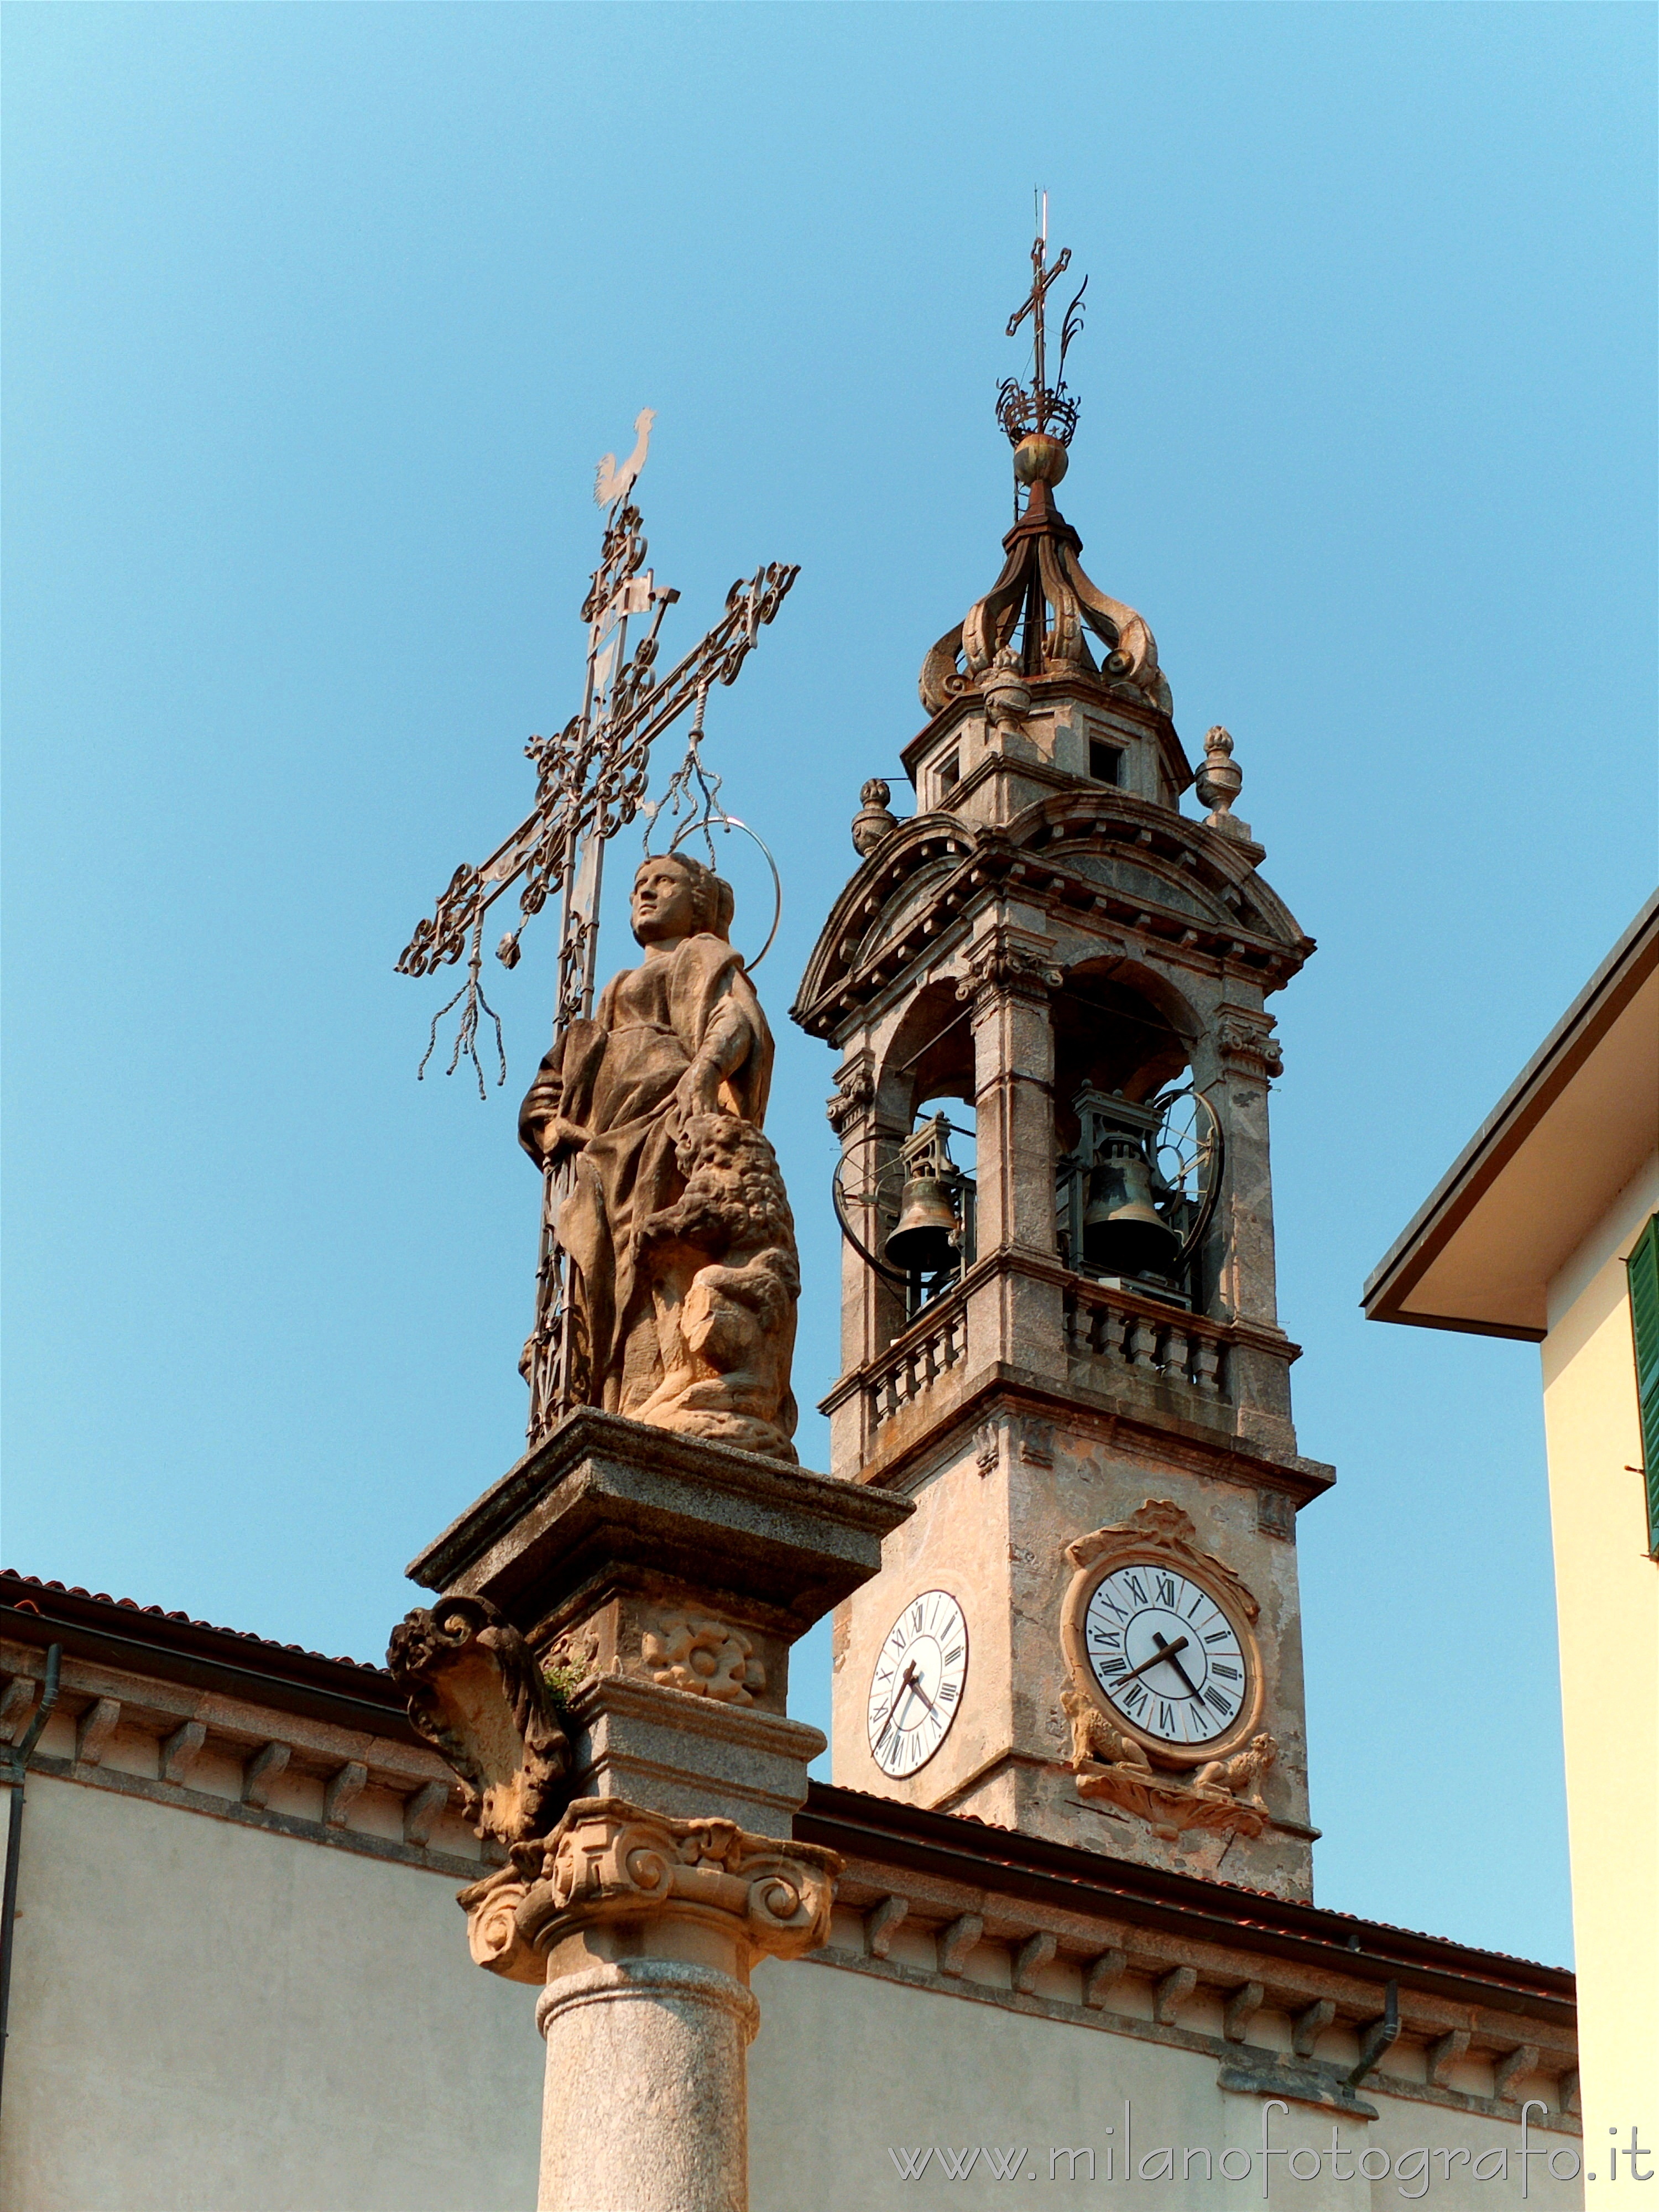 Oggiono (Lecco, Italy): Column of Sant'Eufemia and bell tower of the Church of Sant'Eufemia - Oggiono (Lecco, Italy)